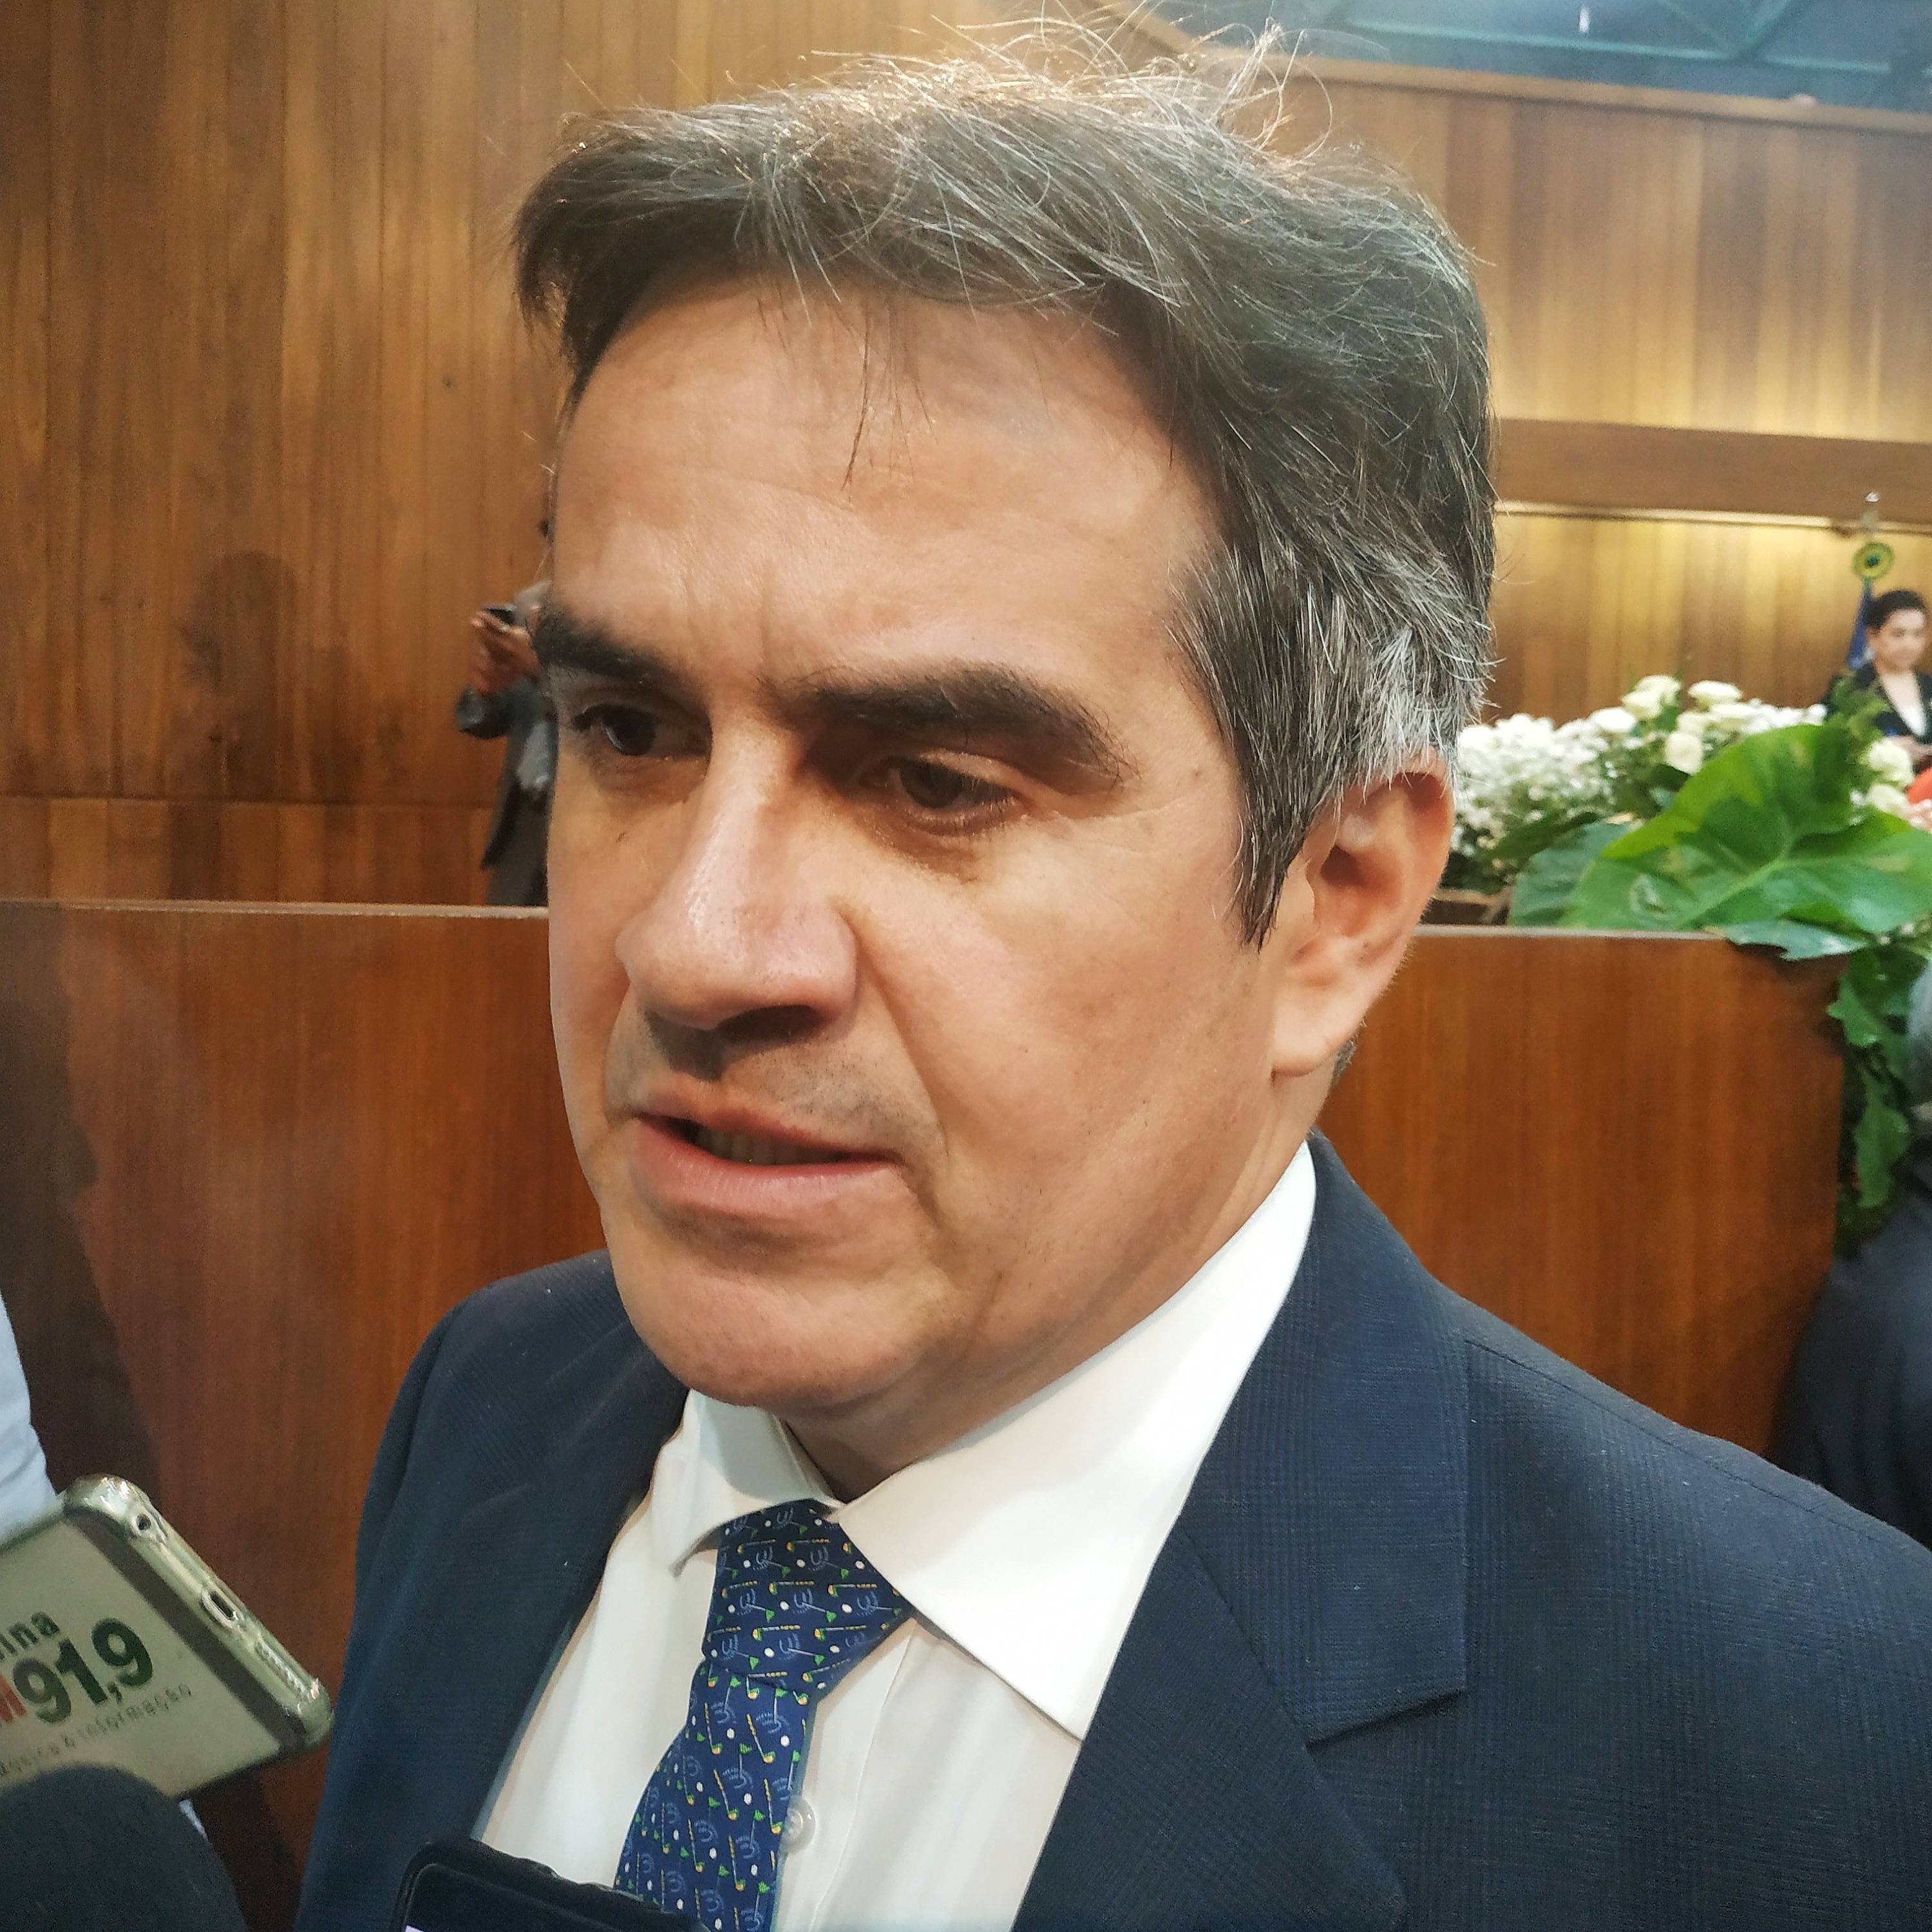 Senador Ciro Nogueira (Progressistas)